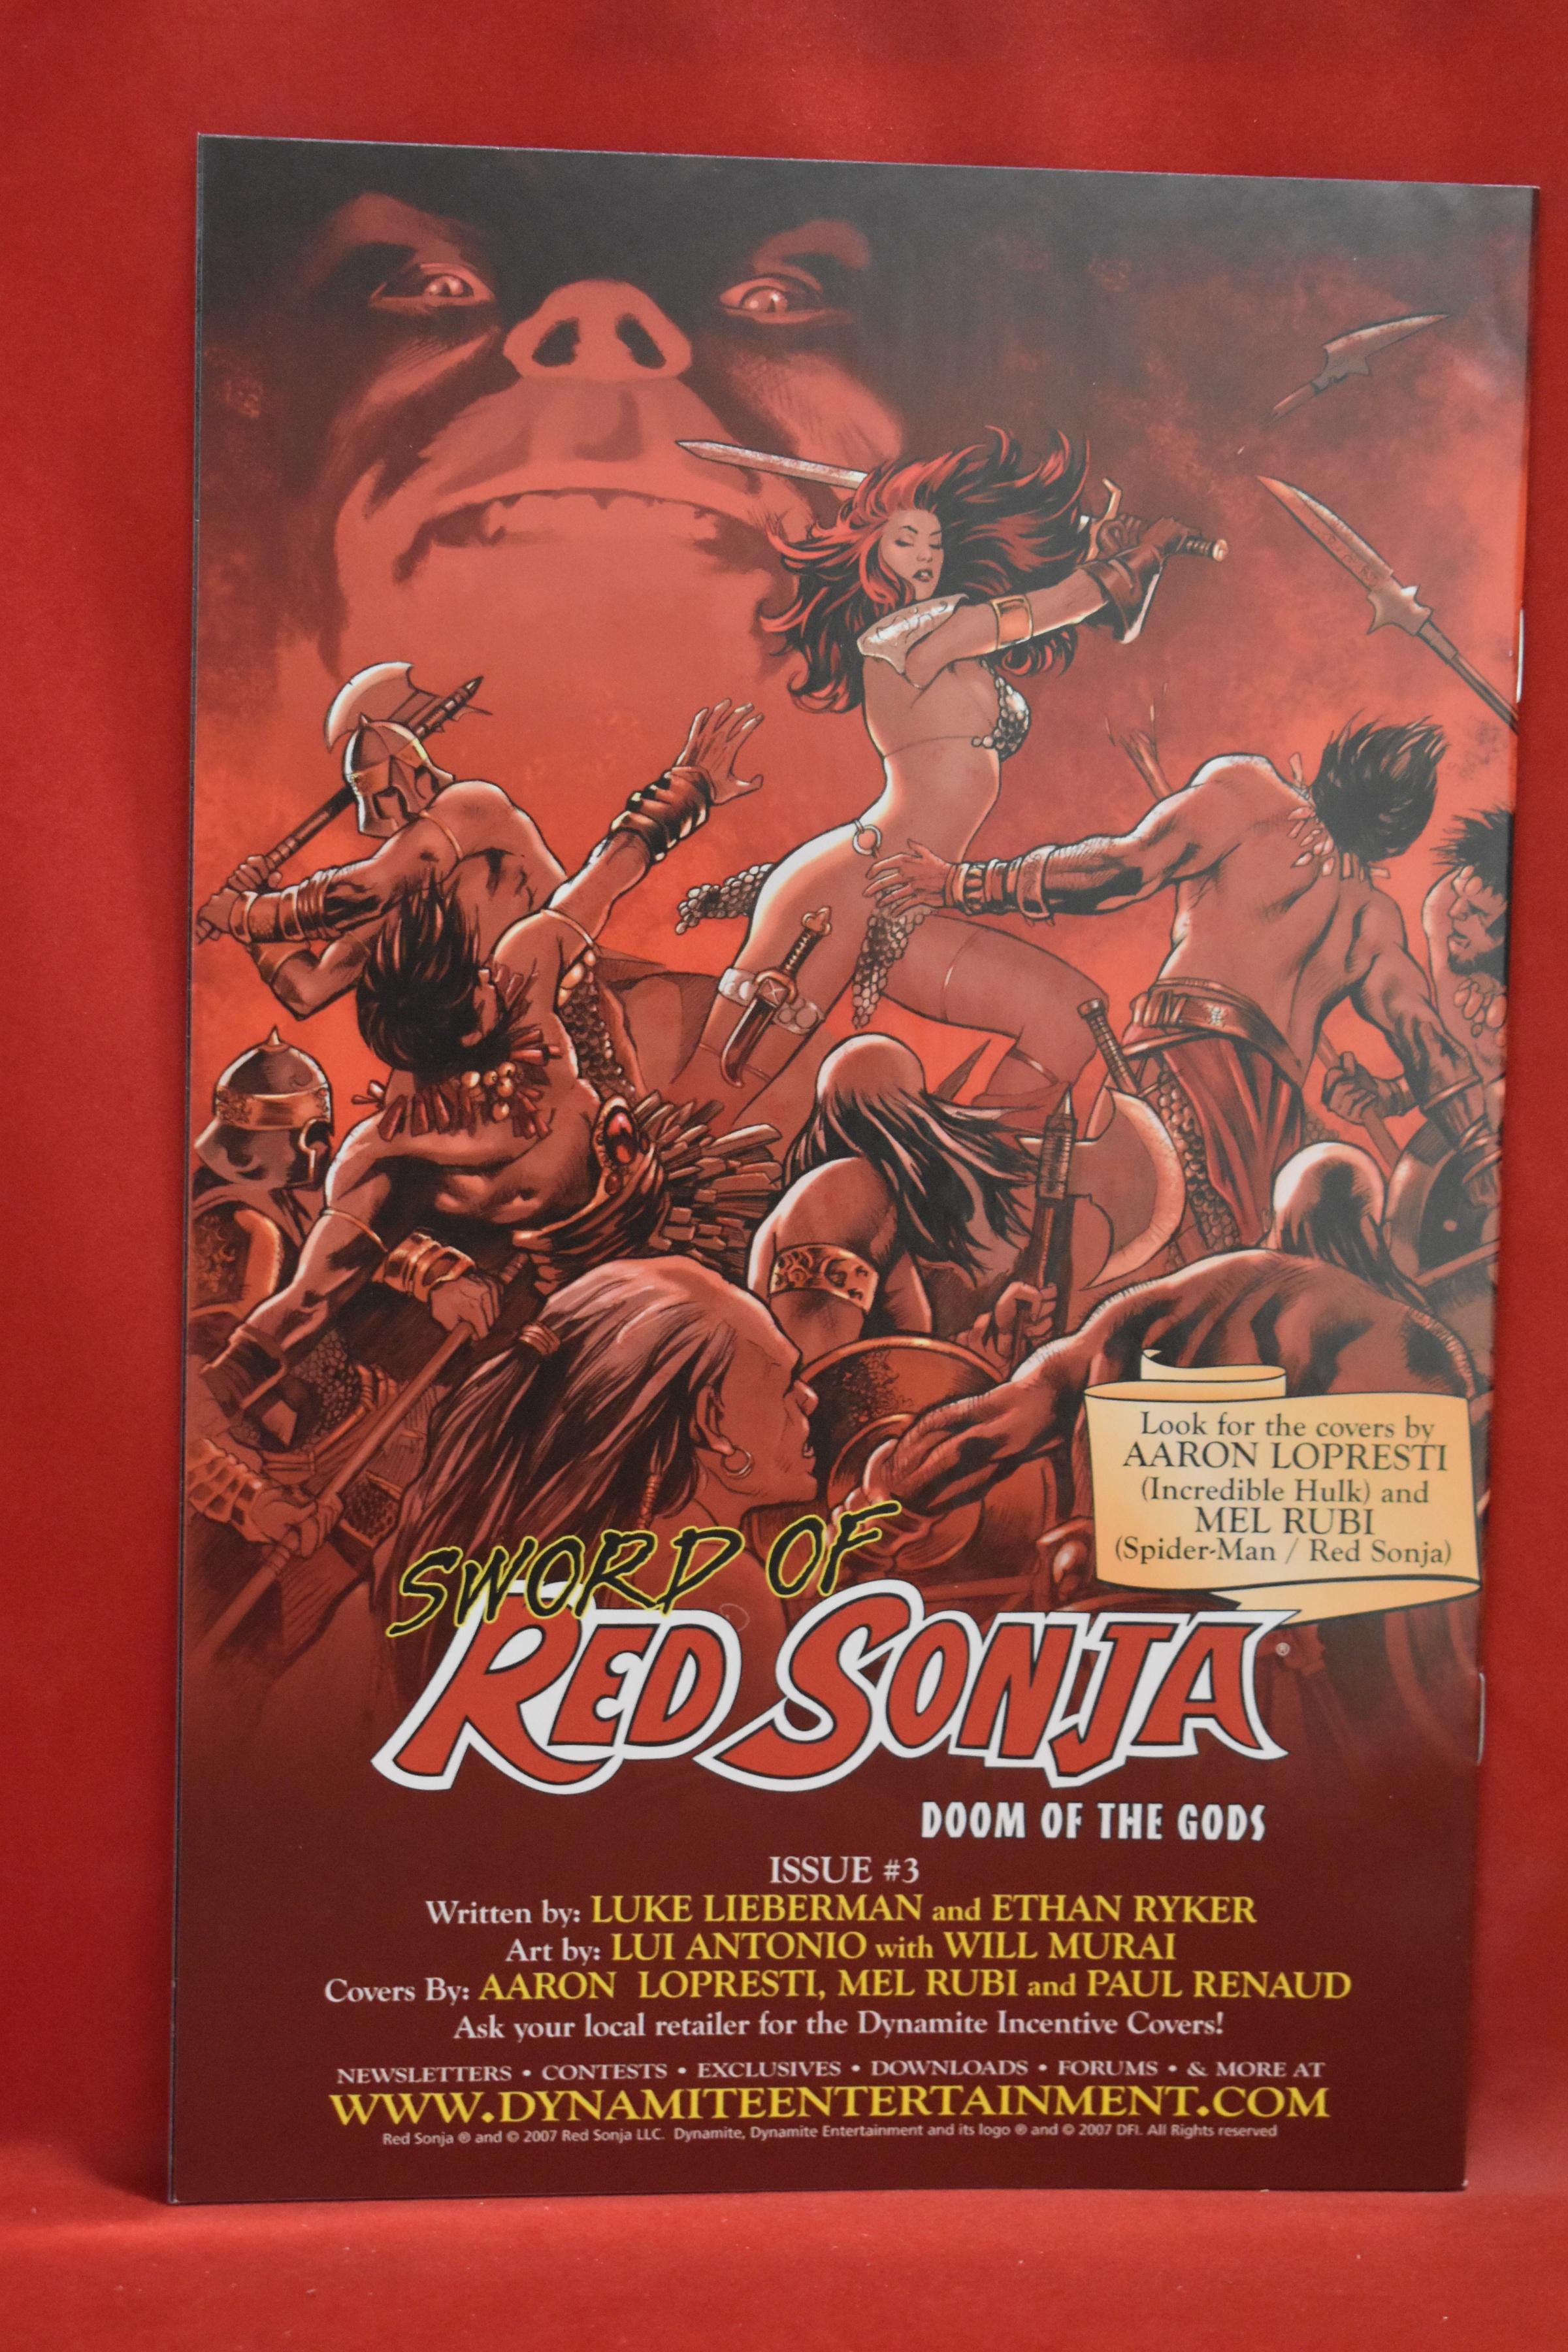 SWORD OF RED SONJA: DOOM OF THE GODS #2 | THE RETURN OF THULSA DOOM!